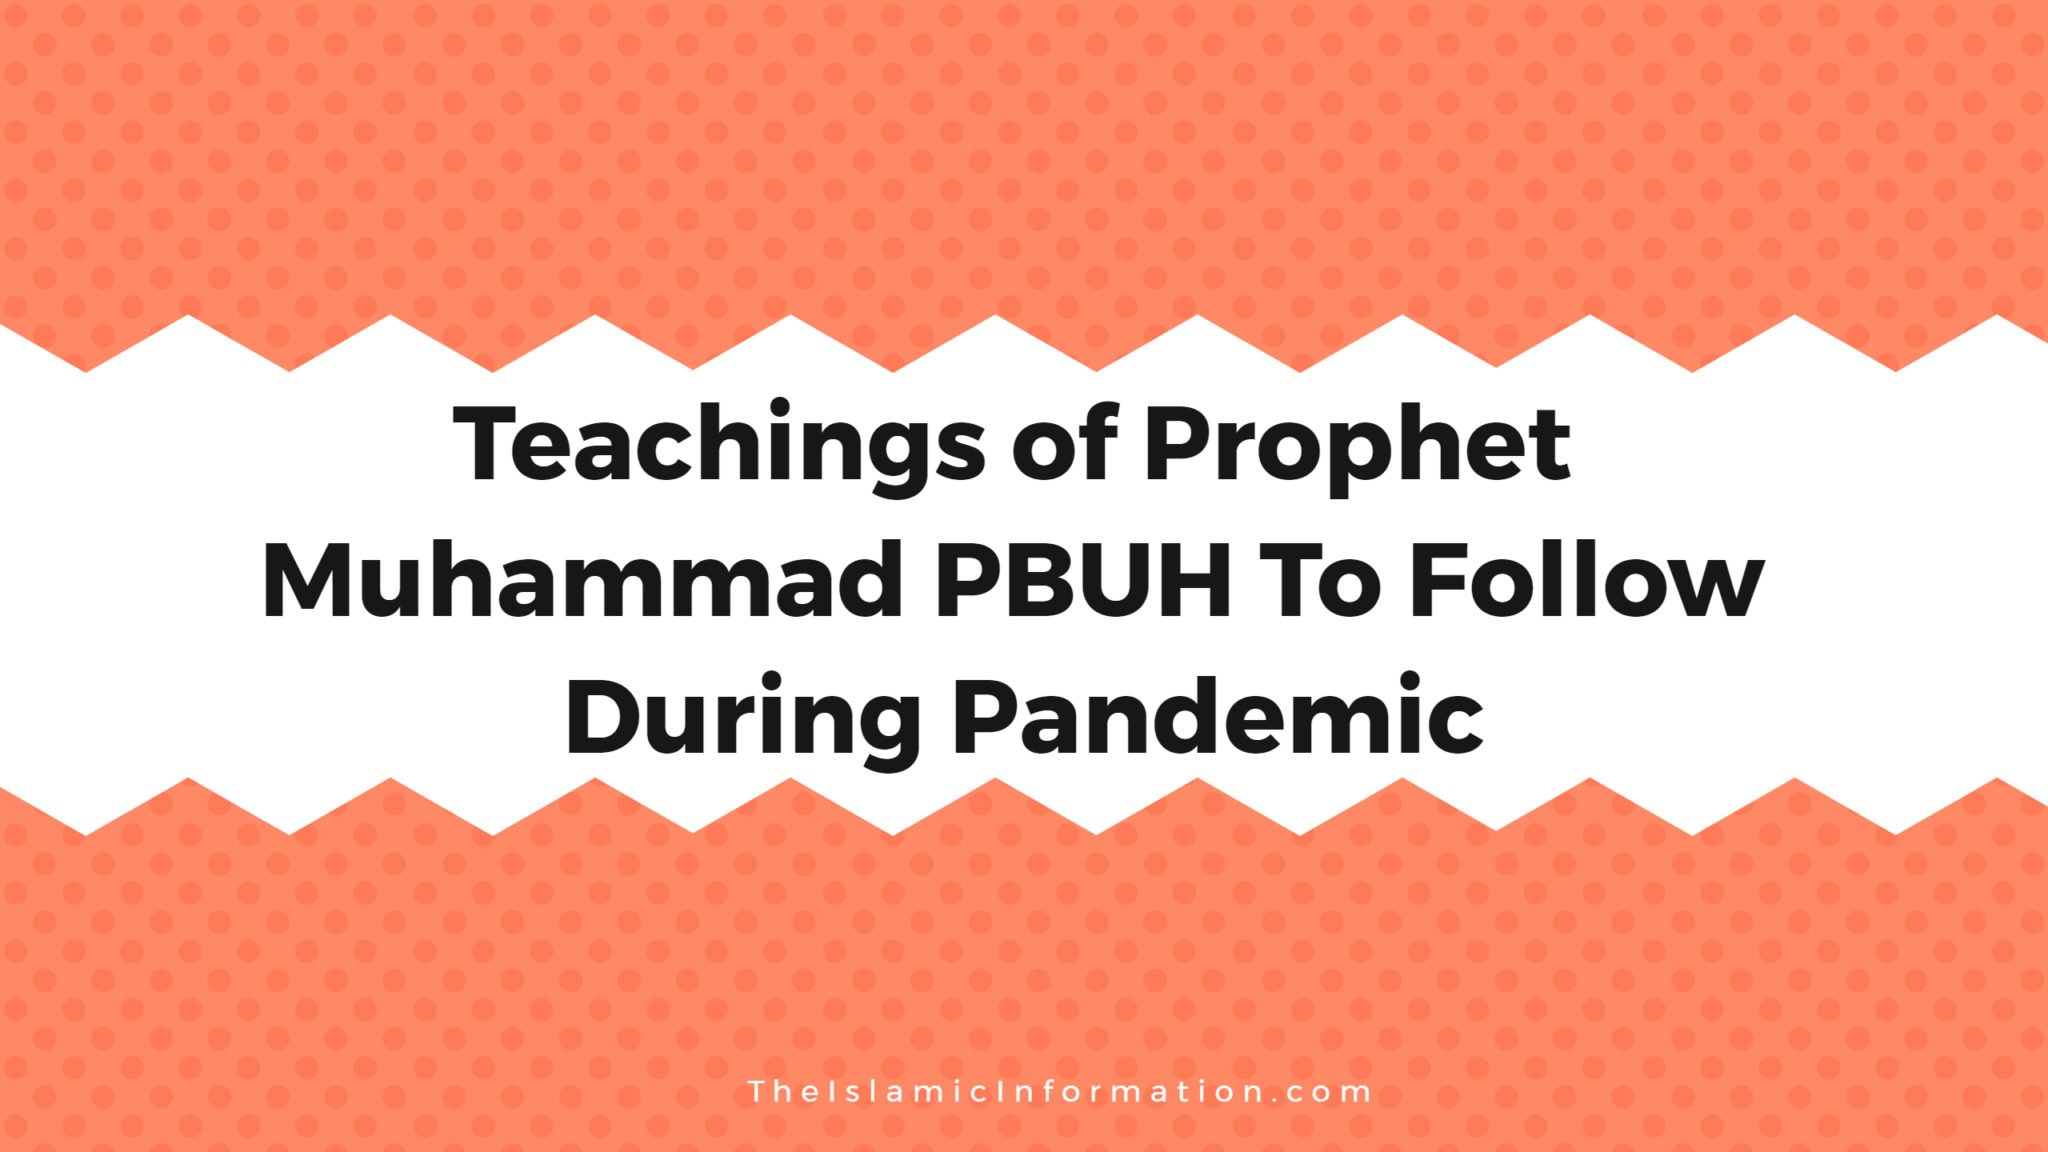 Teachings of Prophet Muhammad PBUH During Pandemic